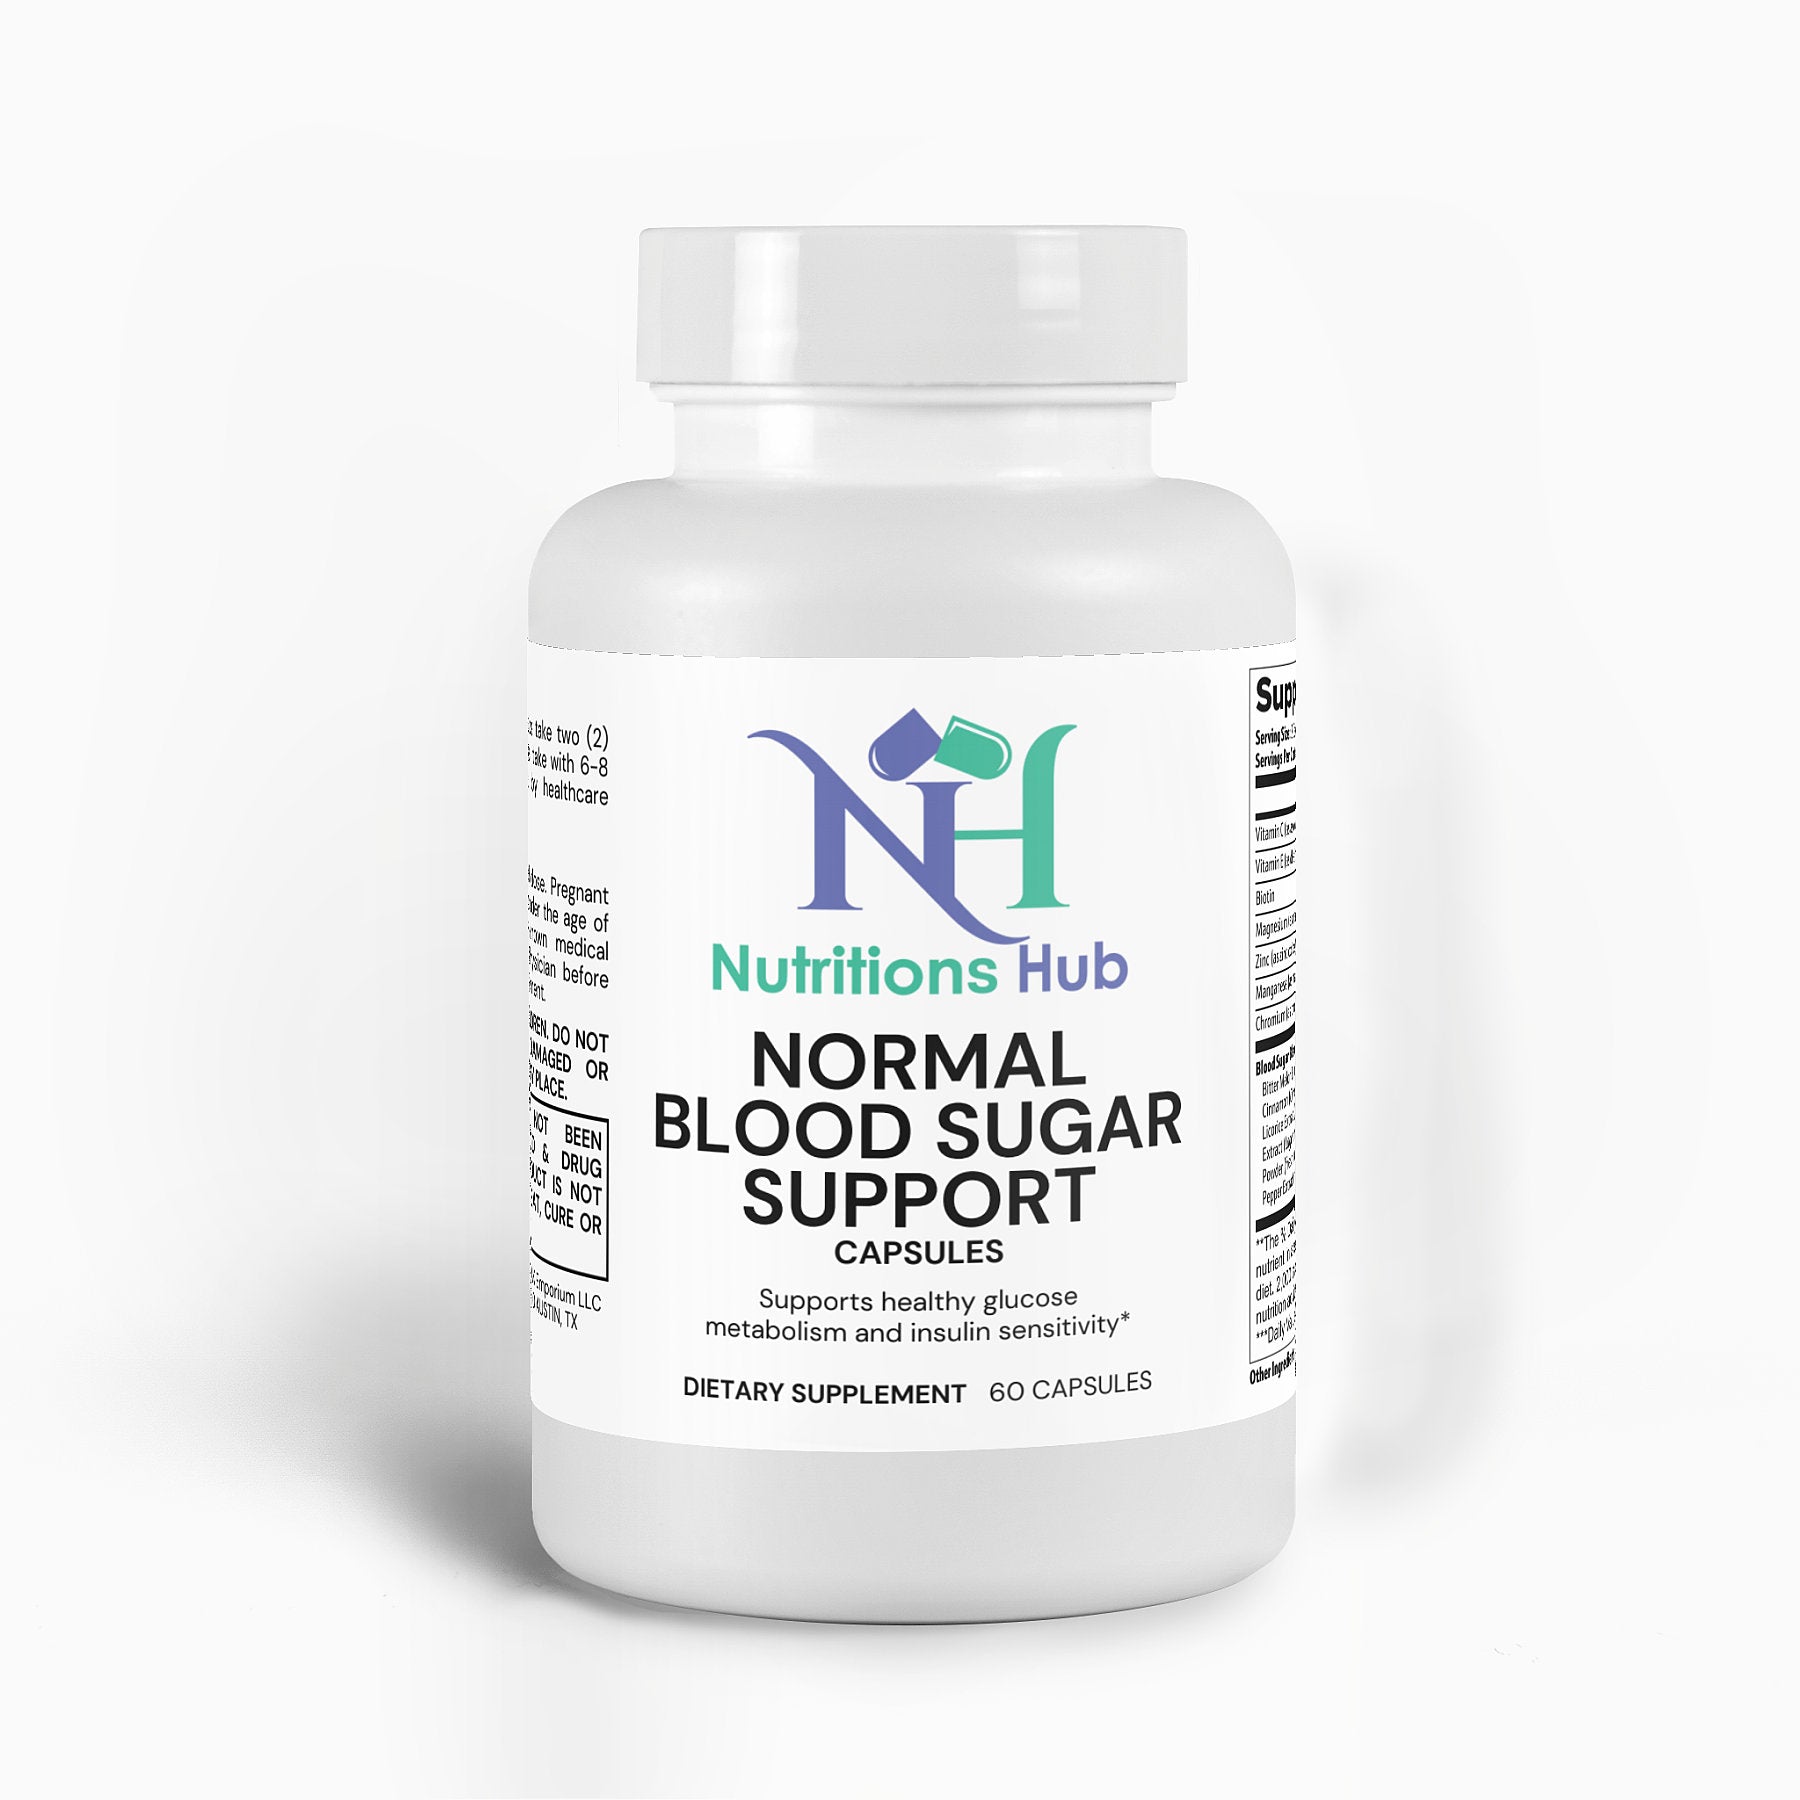 Normal Blood Sugar Support